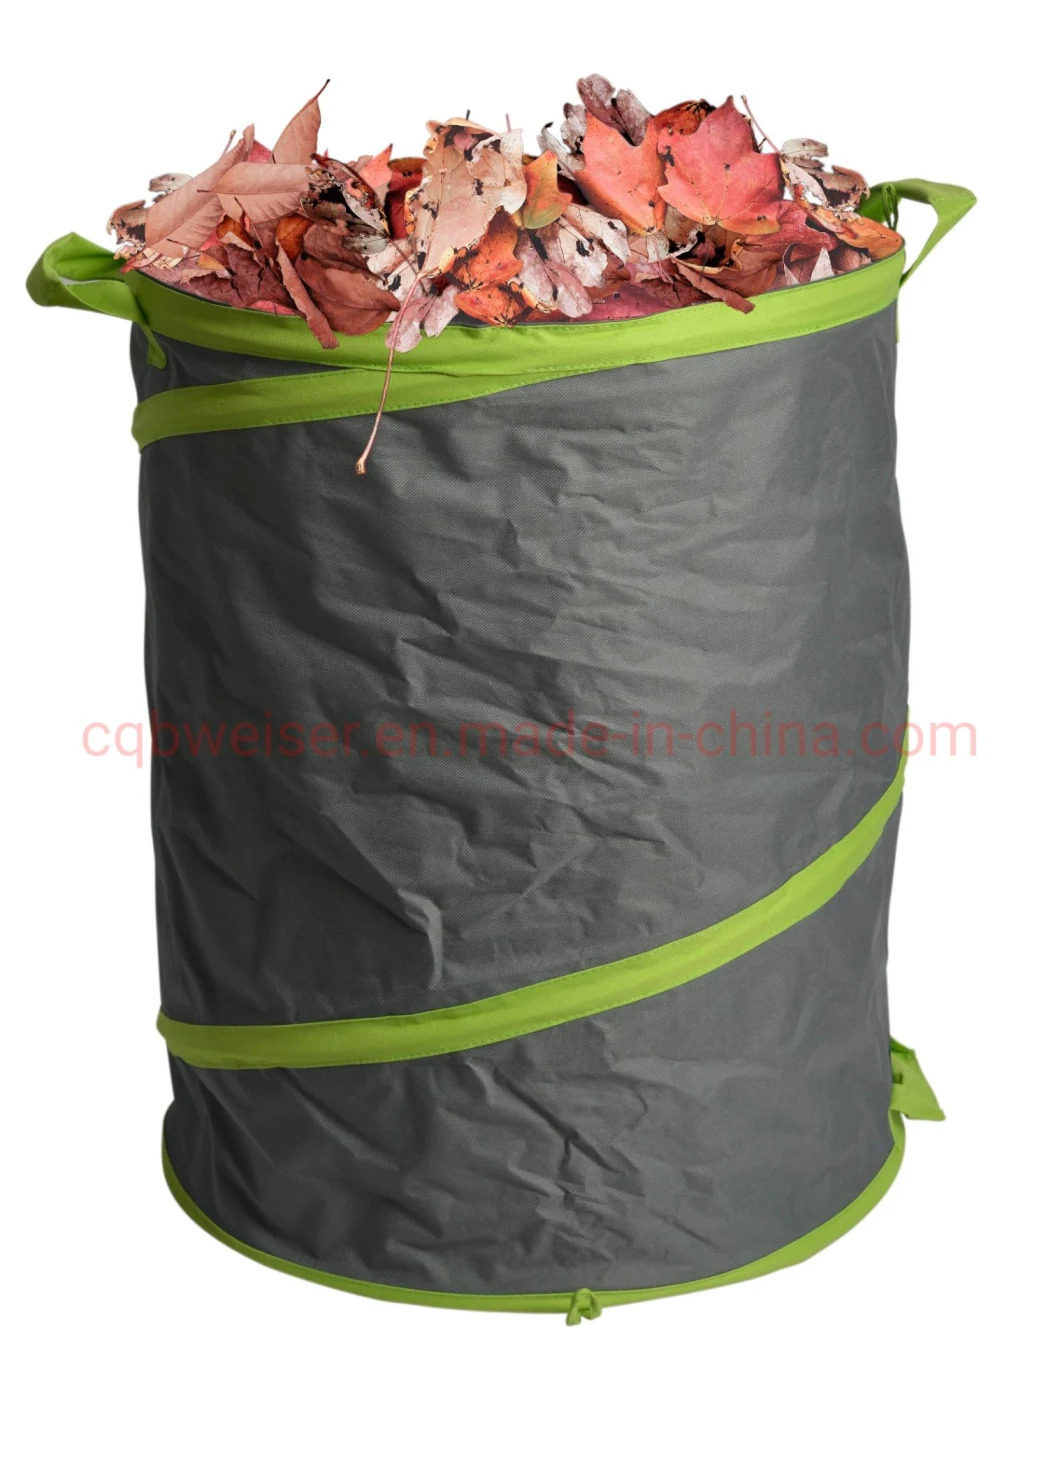 Pop up Collapsible Garden Leaf Bag Lawn Reusable Bag